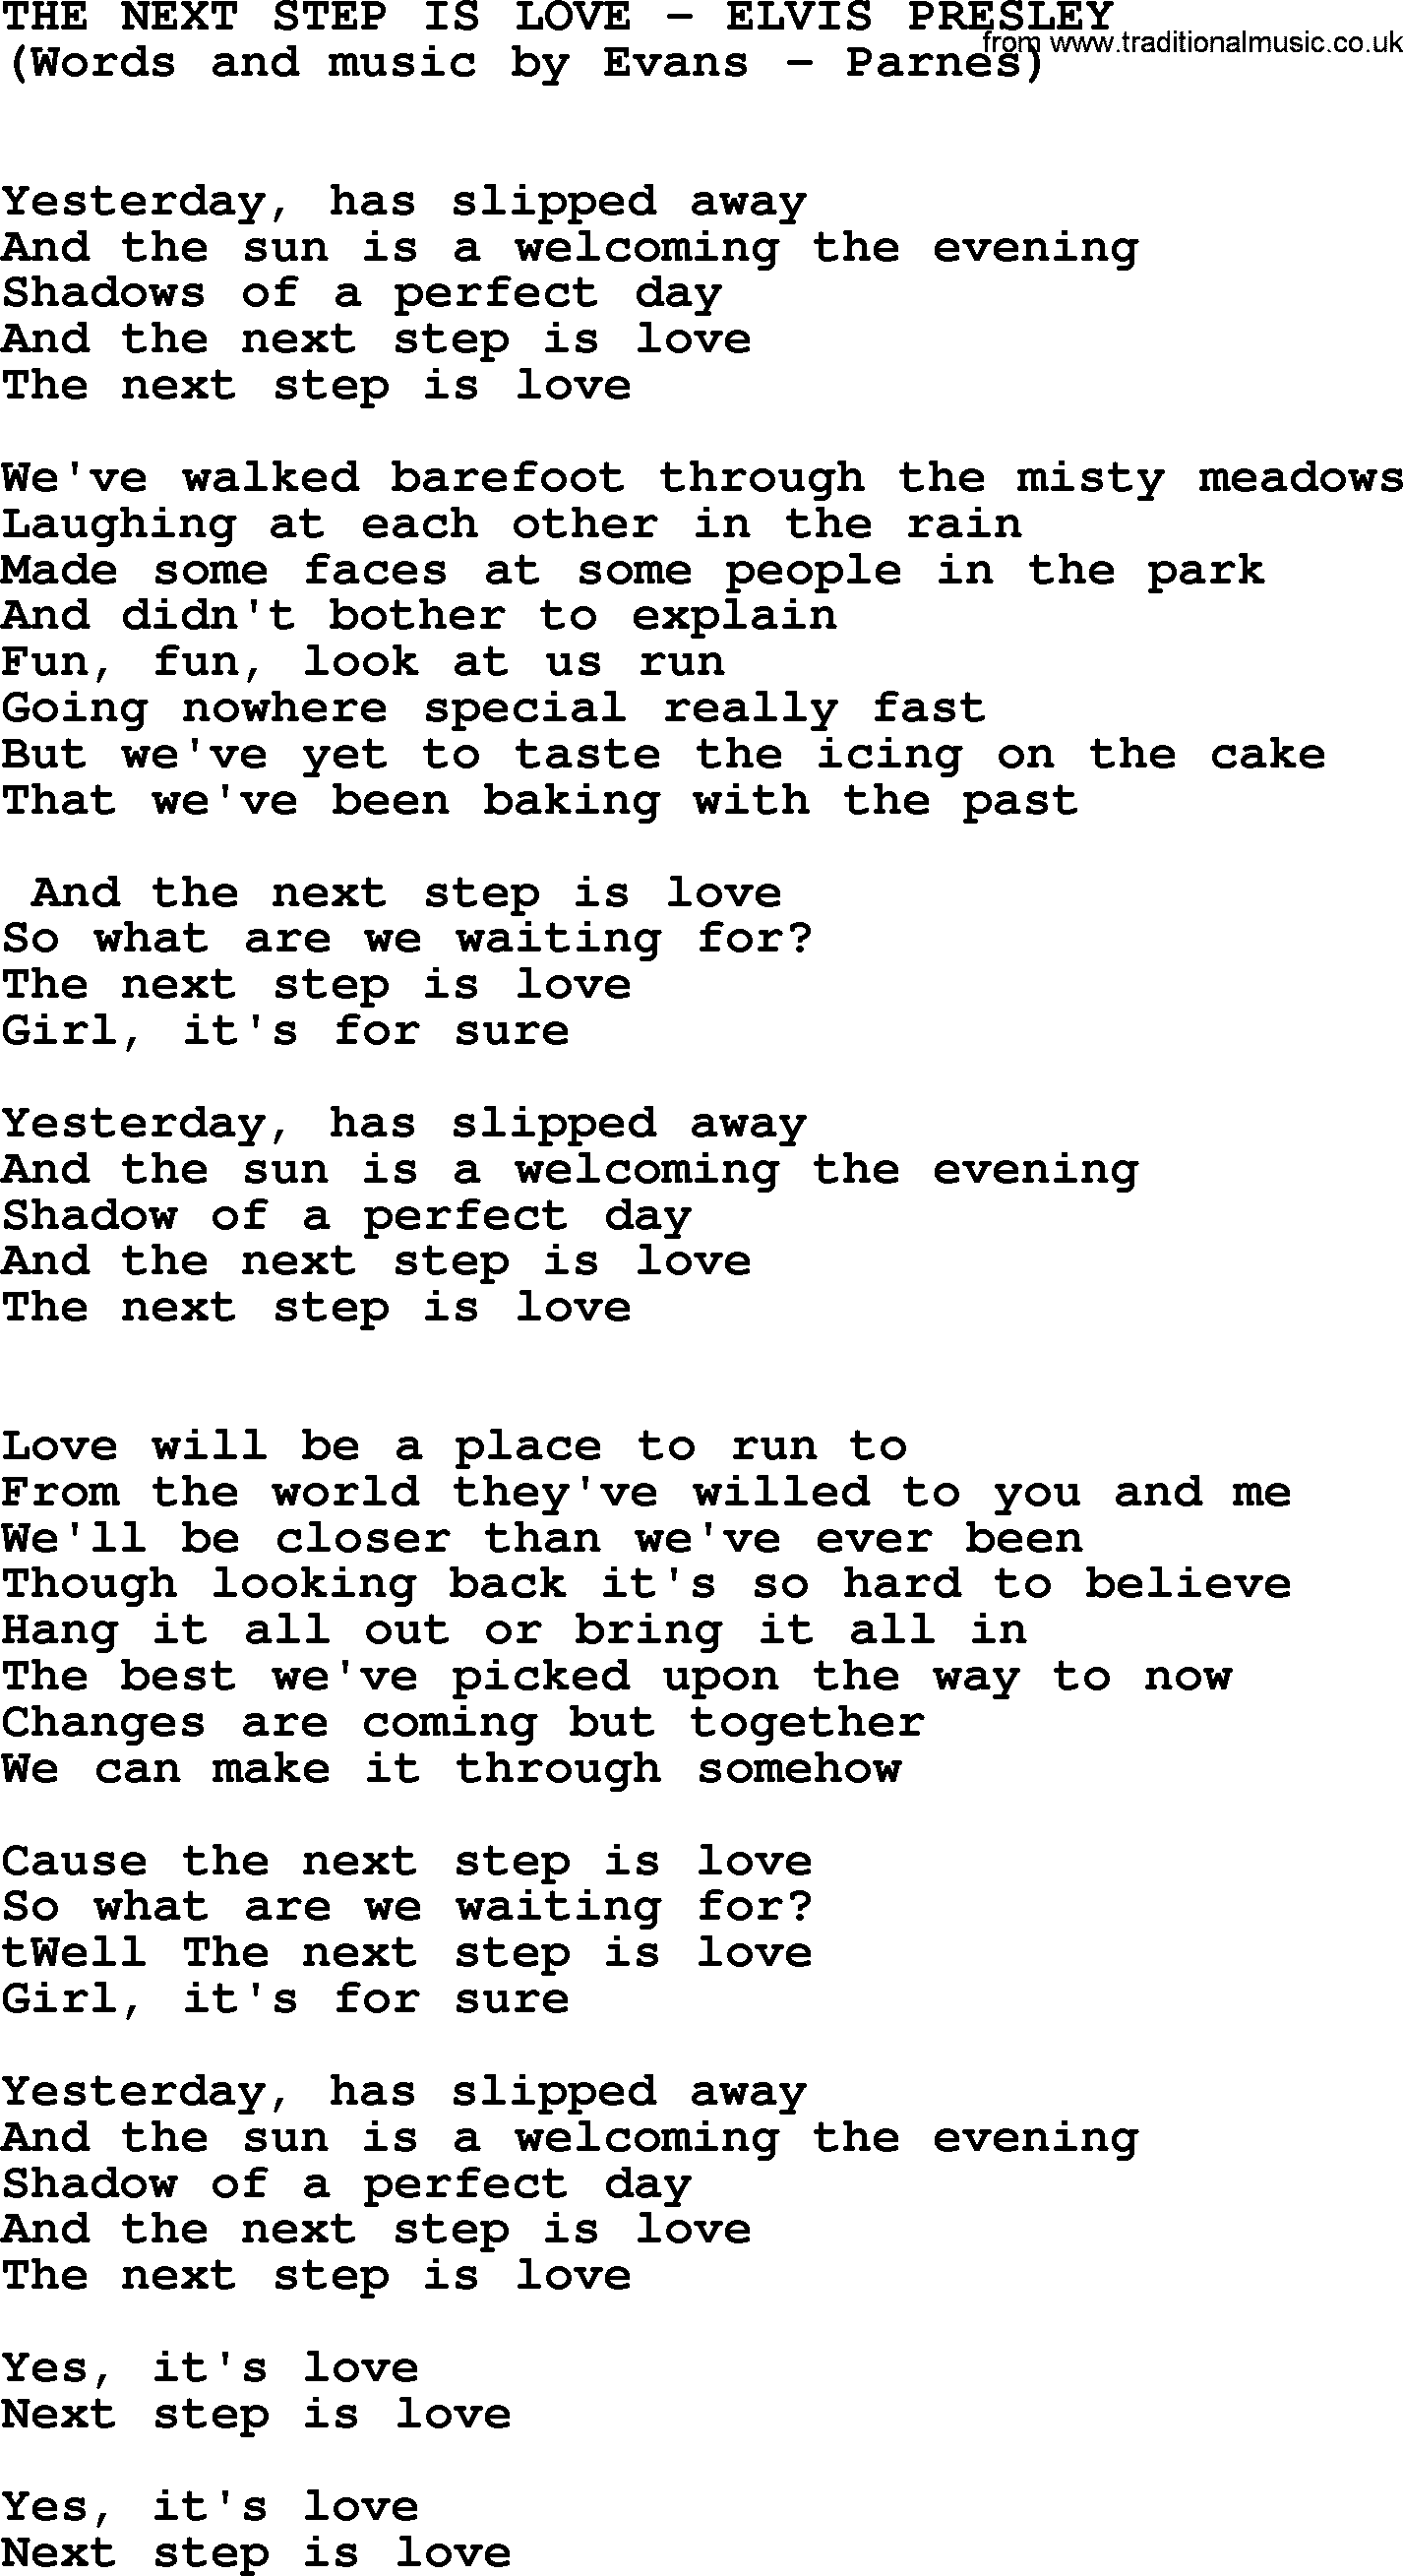 Elvis Presley song: The Next Step Is Love lyrics